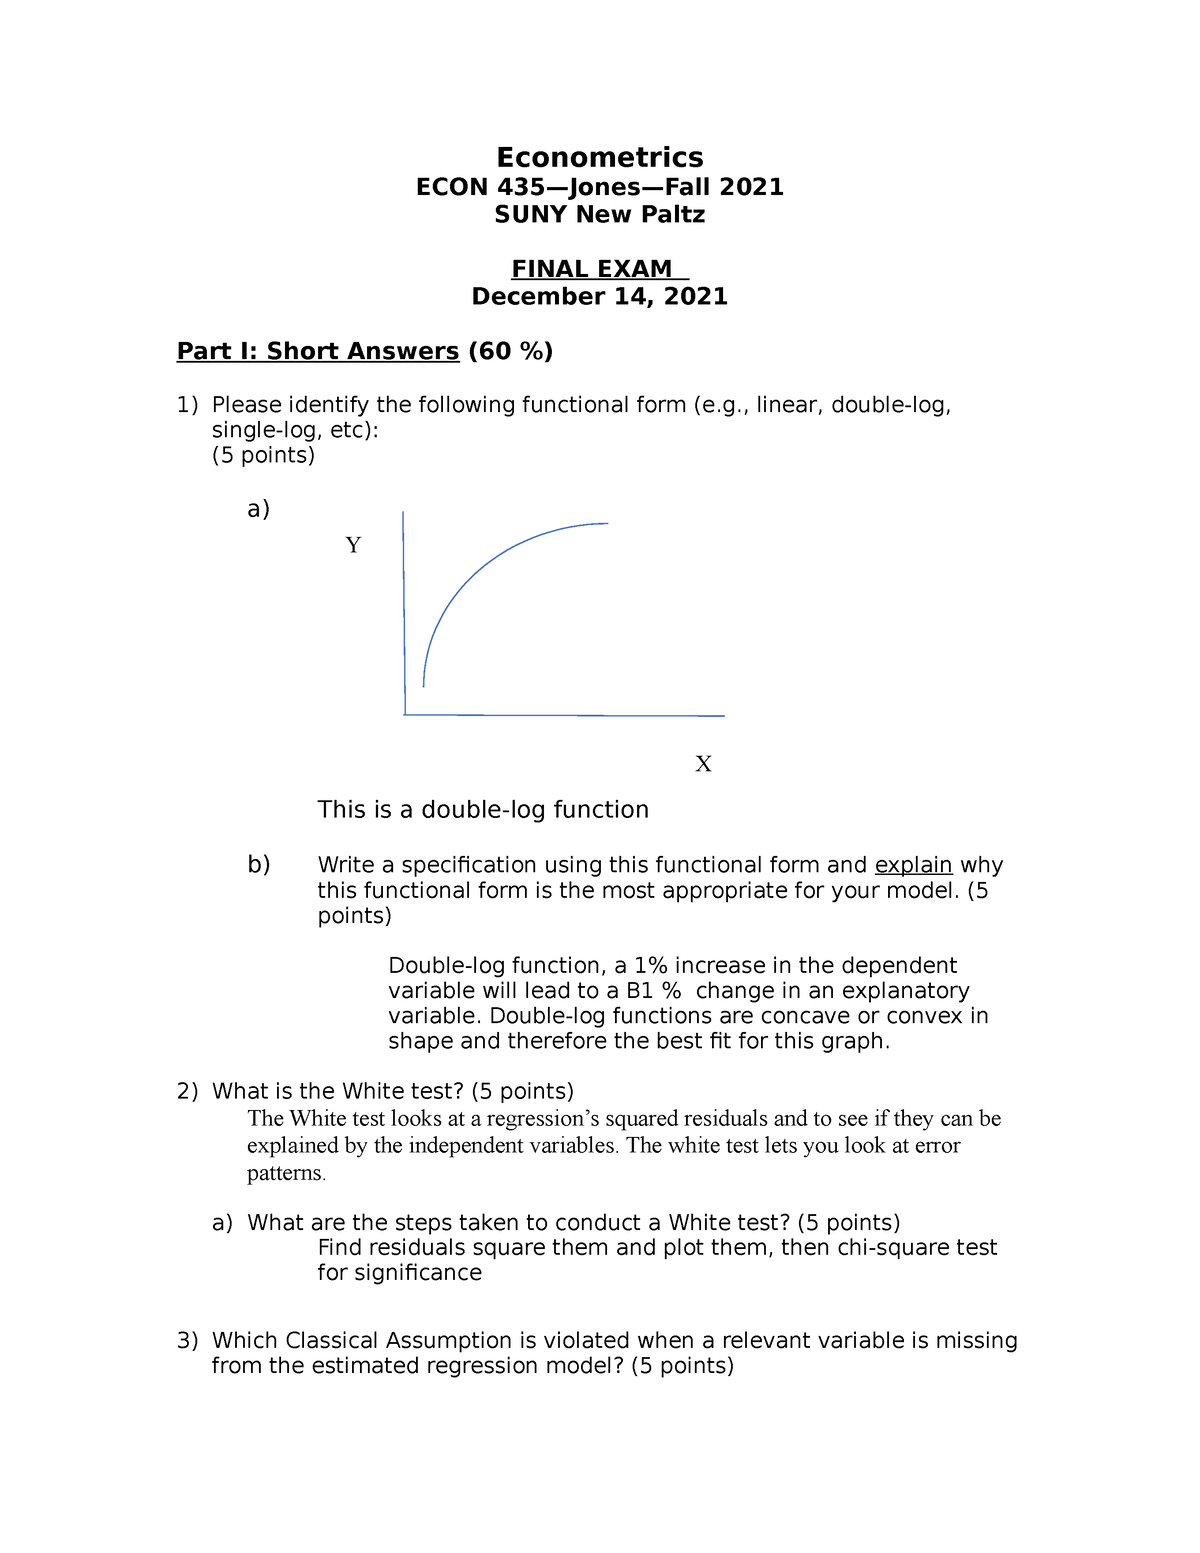 Econometrics Final Exam Econometrics ECON 435—Jones—Fall 2021 SUNY